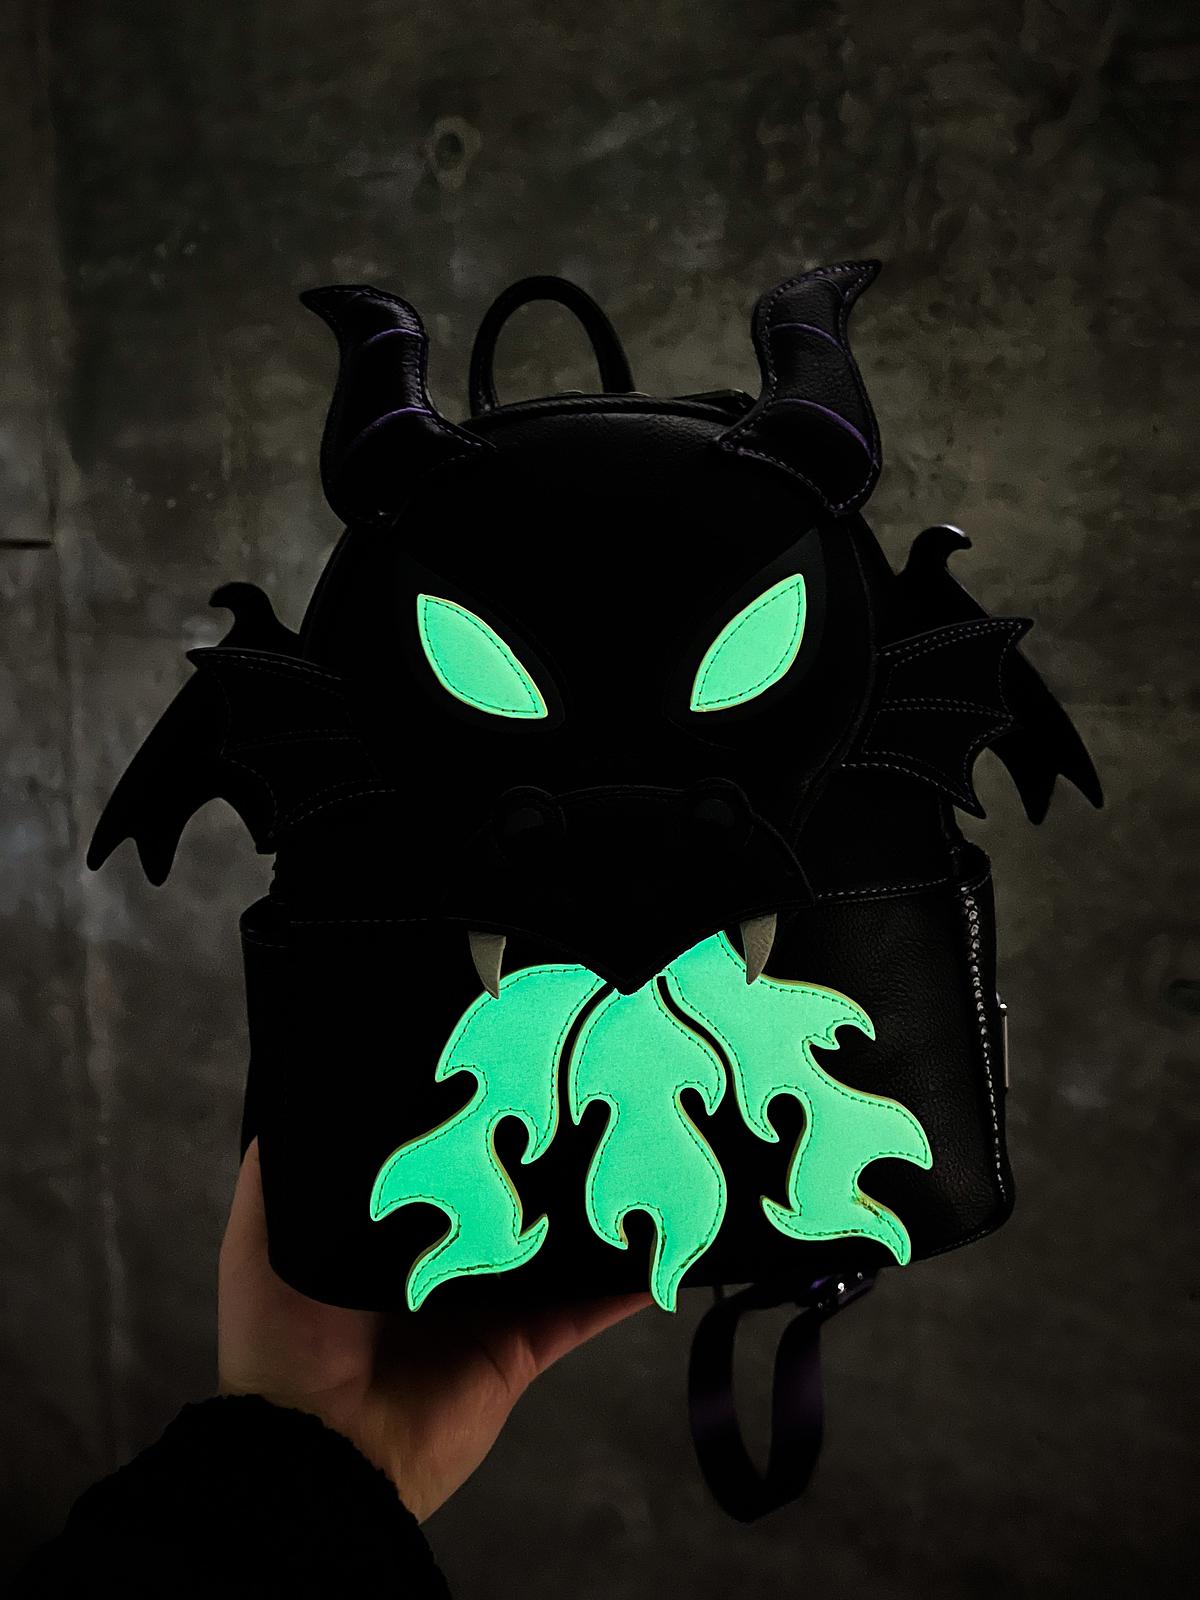 Grotto Treasures Exclusive - Disney Sleeping Beauty Maleficent Dragon  Cosplay Glow in the Dark Mini Backpack